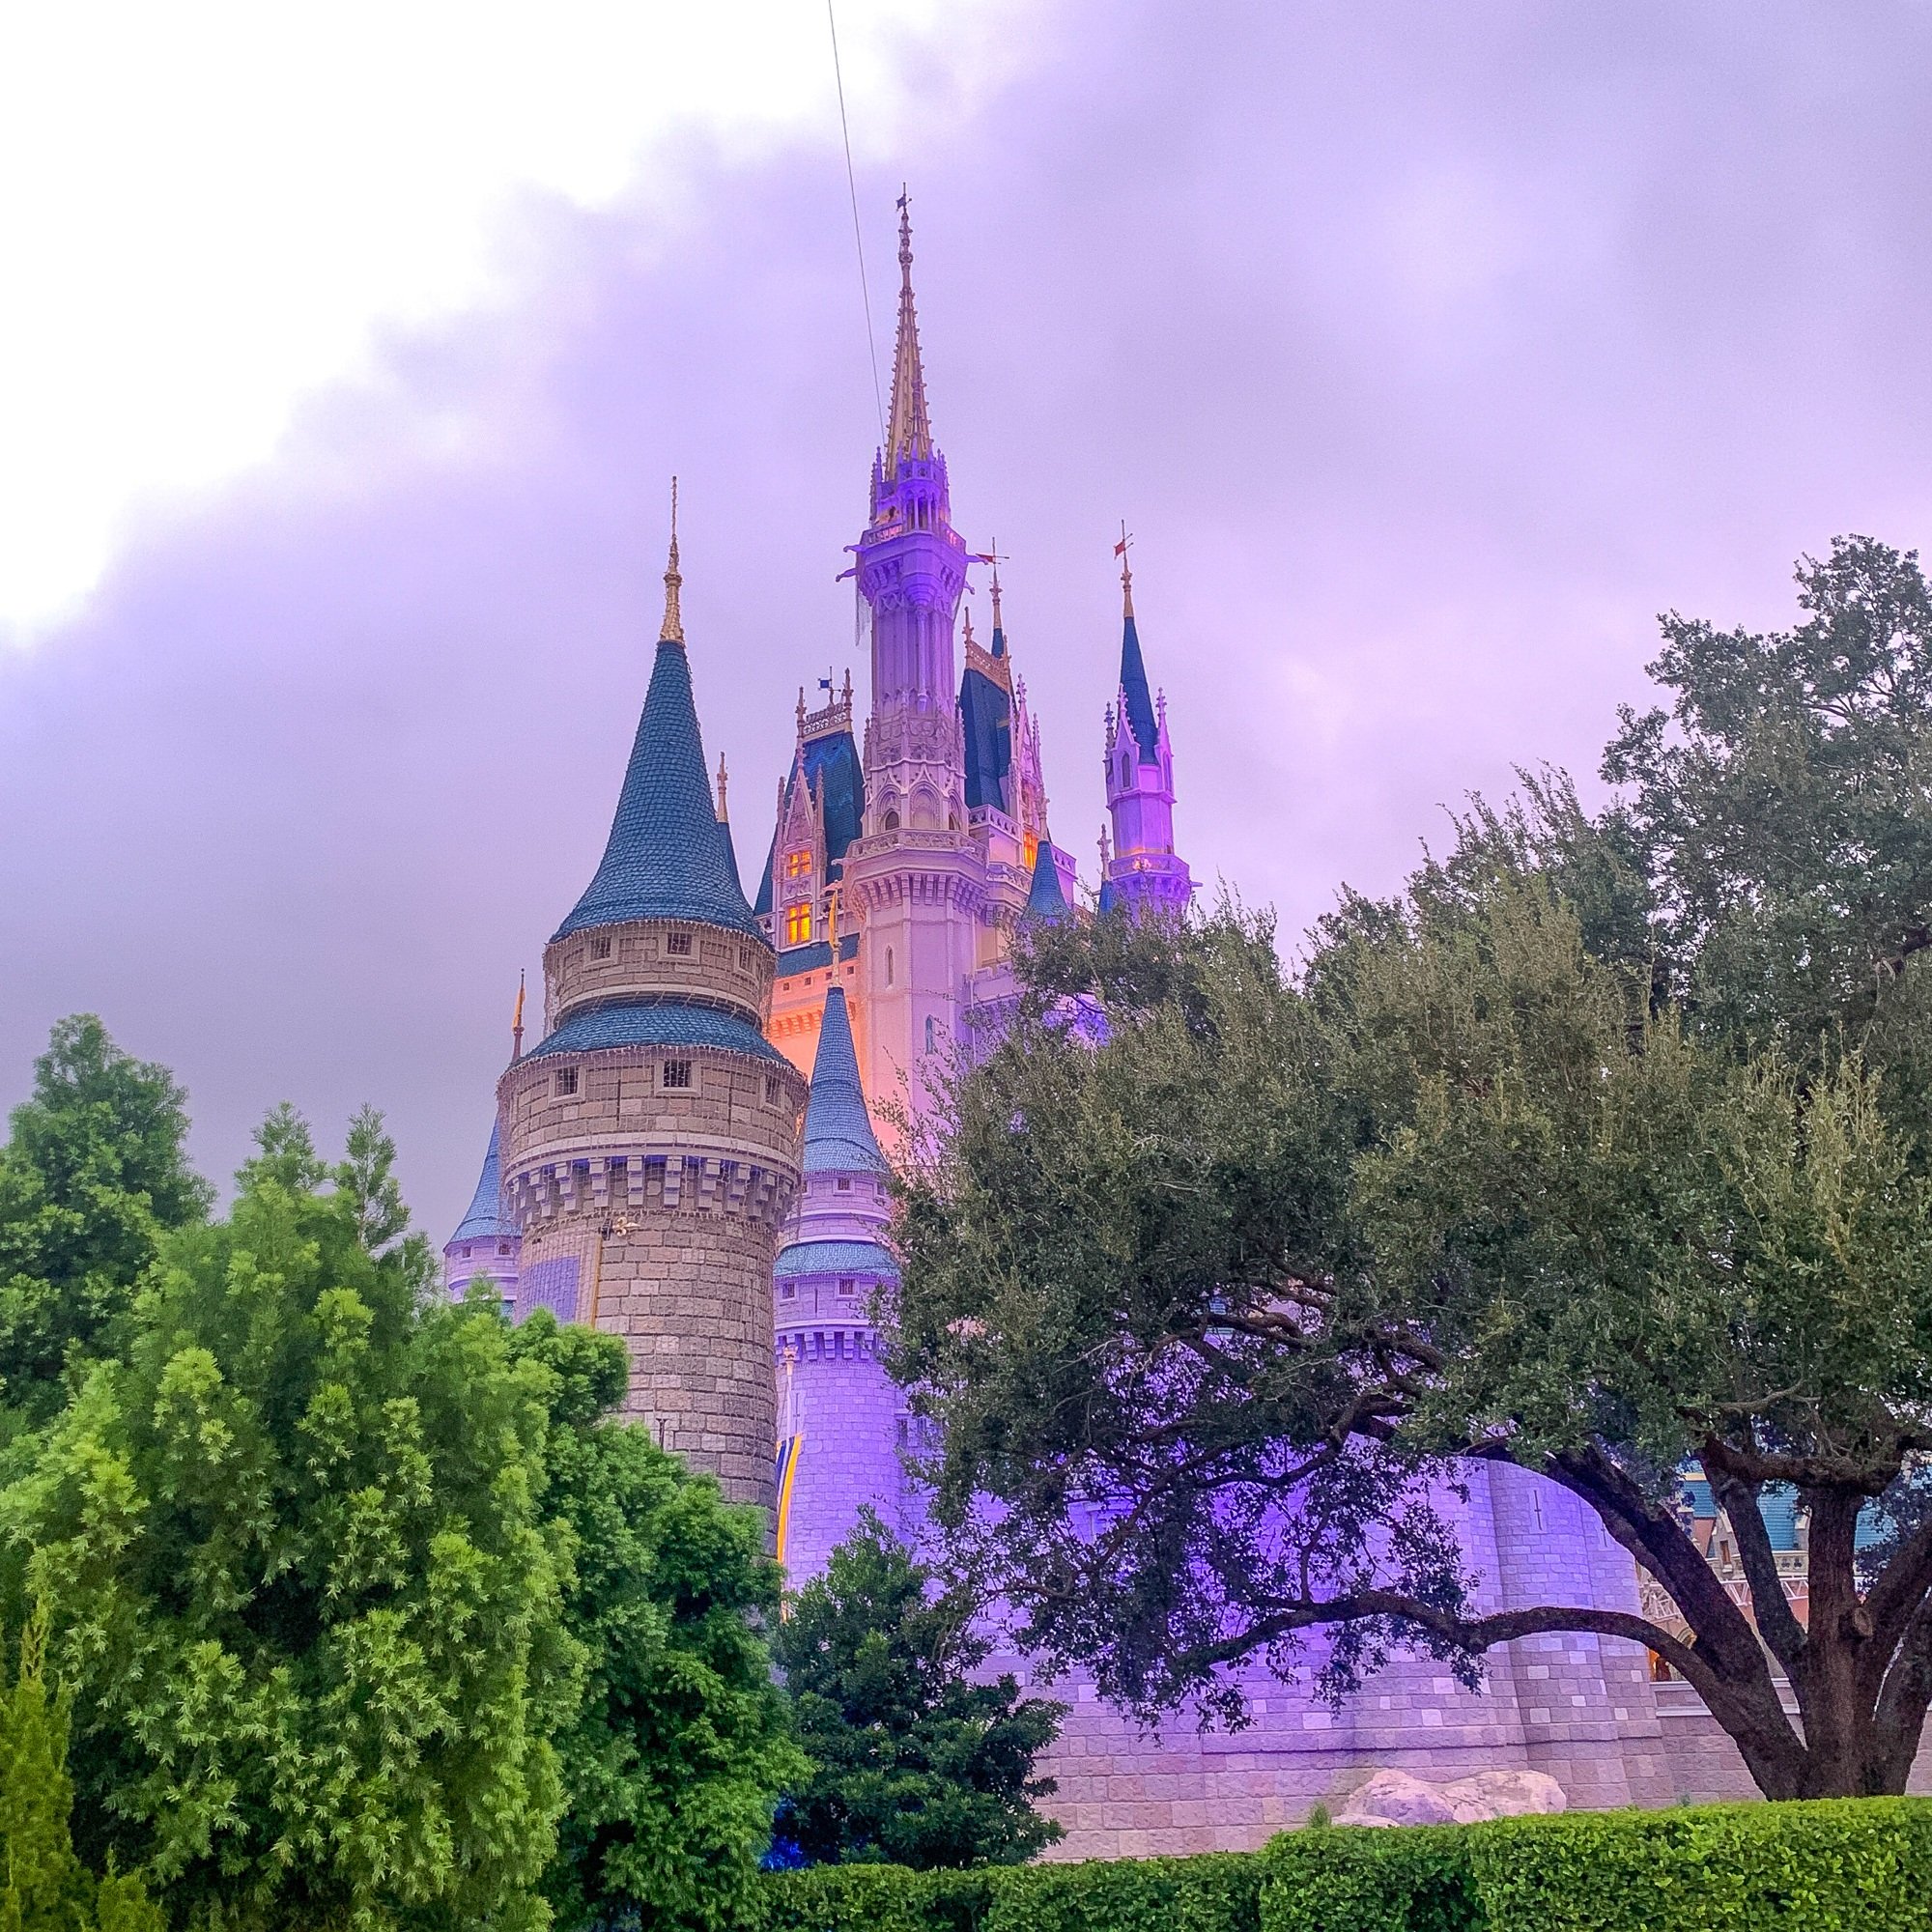 Cinderella Castle at Walt Disney World's Magic Kingdom